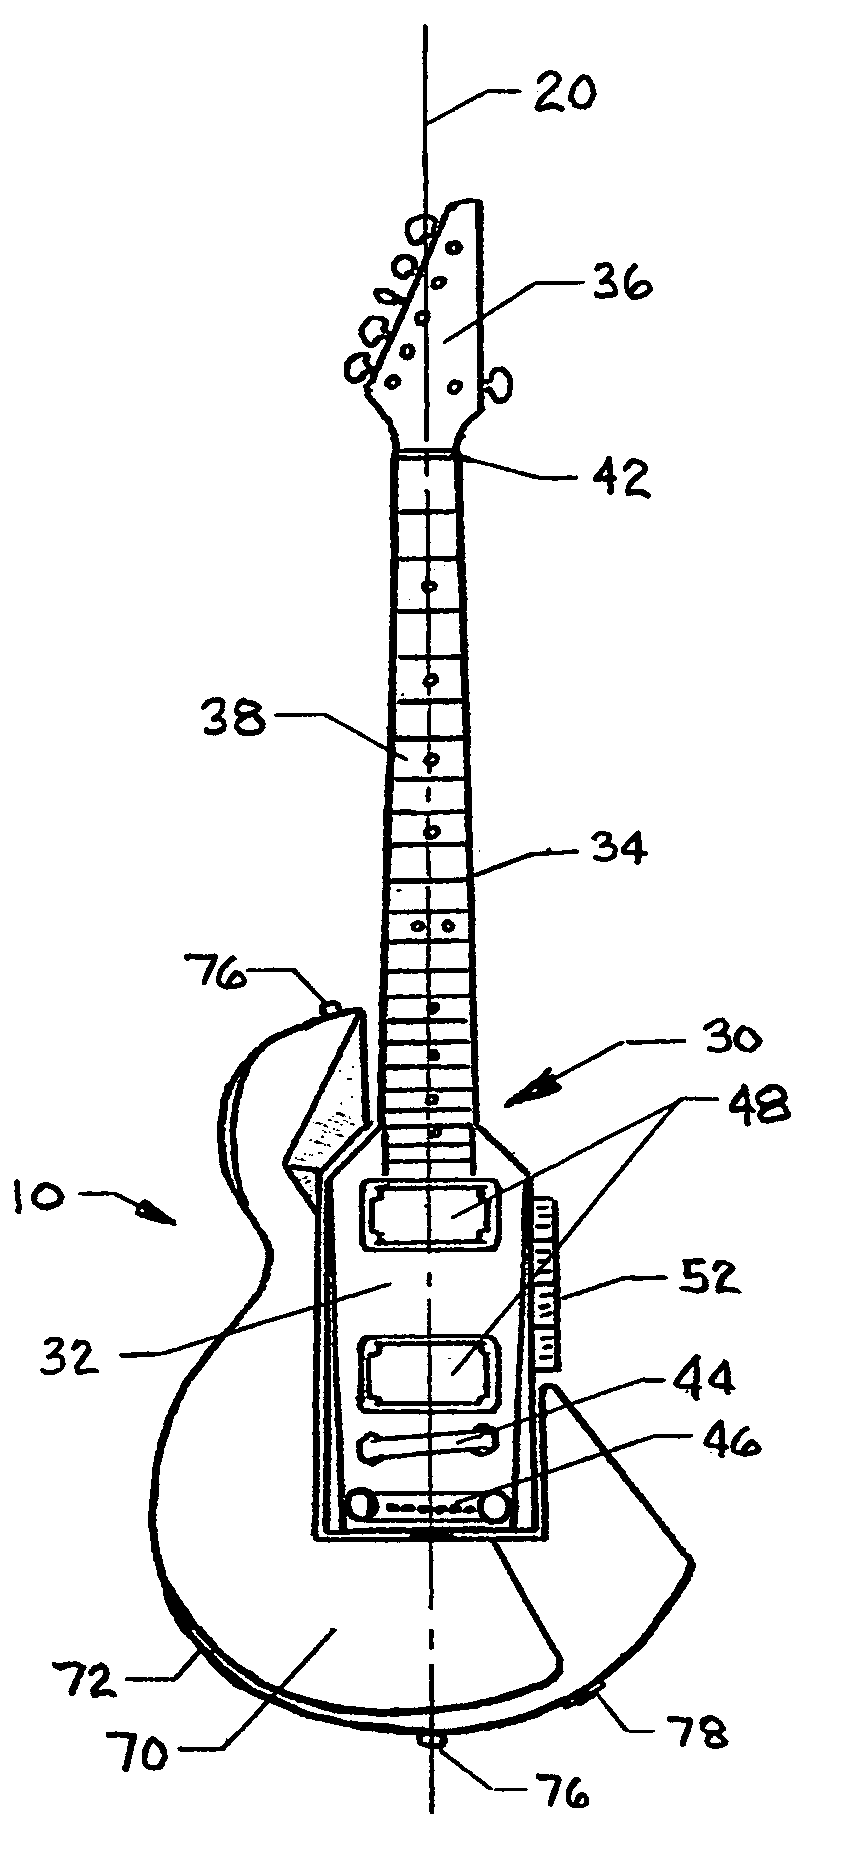 User-adjustable ergonomic stringed musical instrument